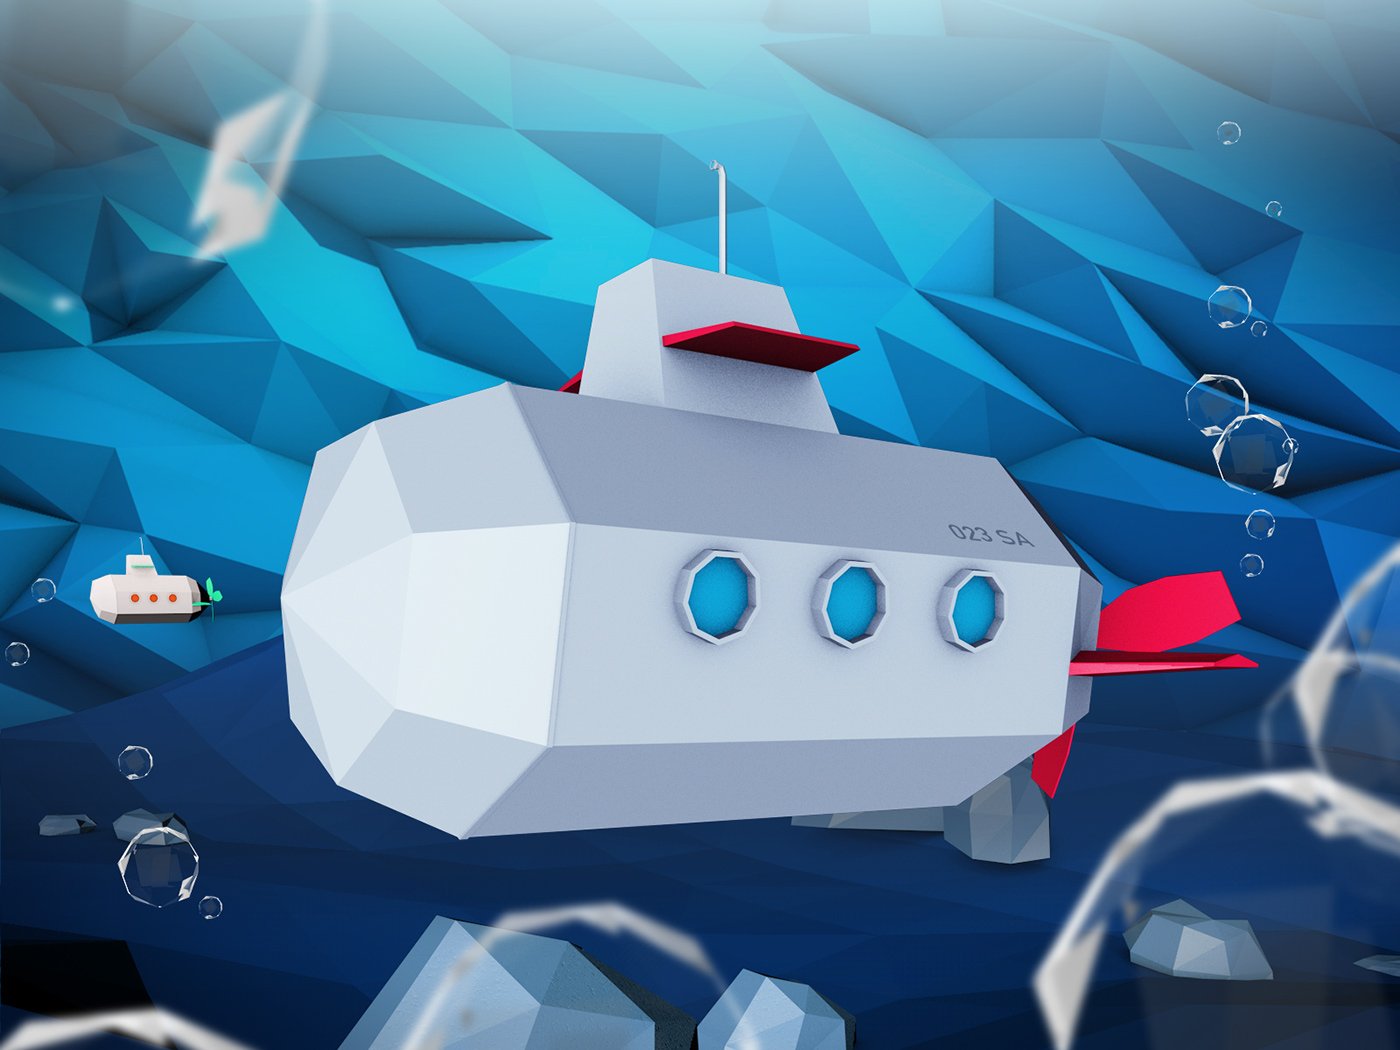 Cartoon Submarine cover image.